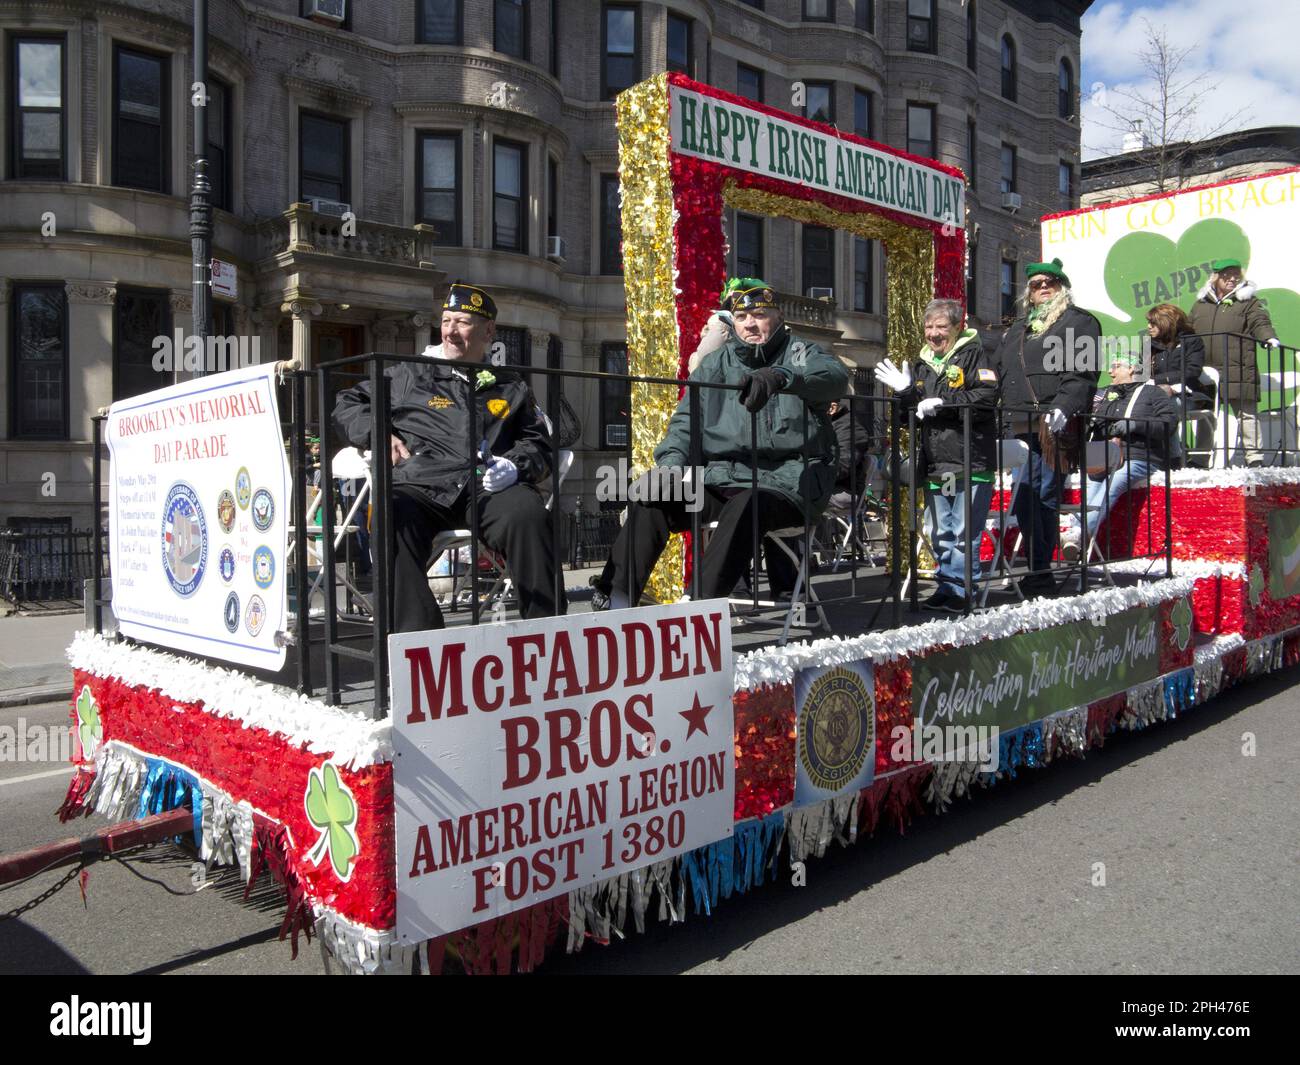 American Legion Post float dans St. Patrick's Day Parade à Park Slope, Brooklyn, NY Banque D'Images